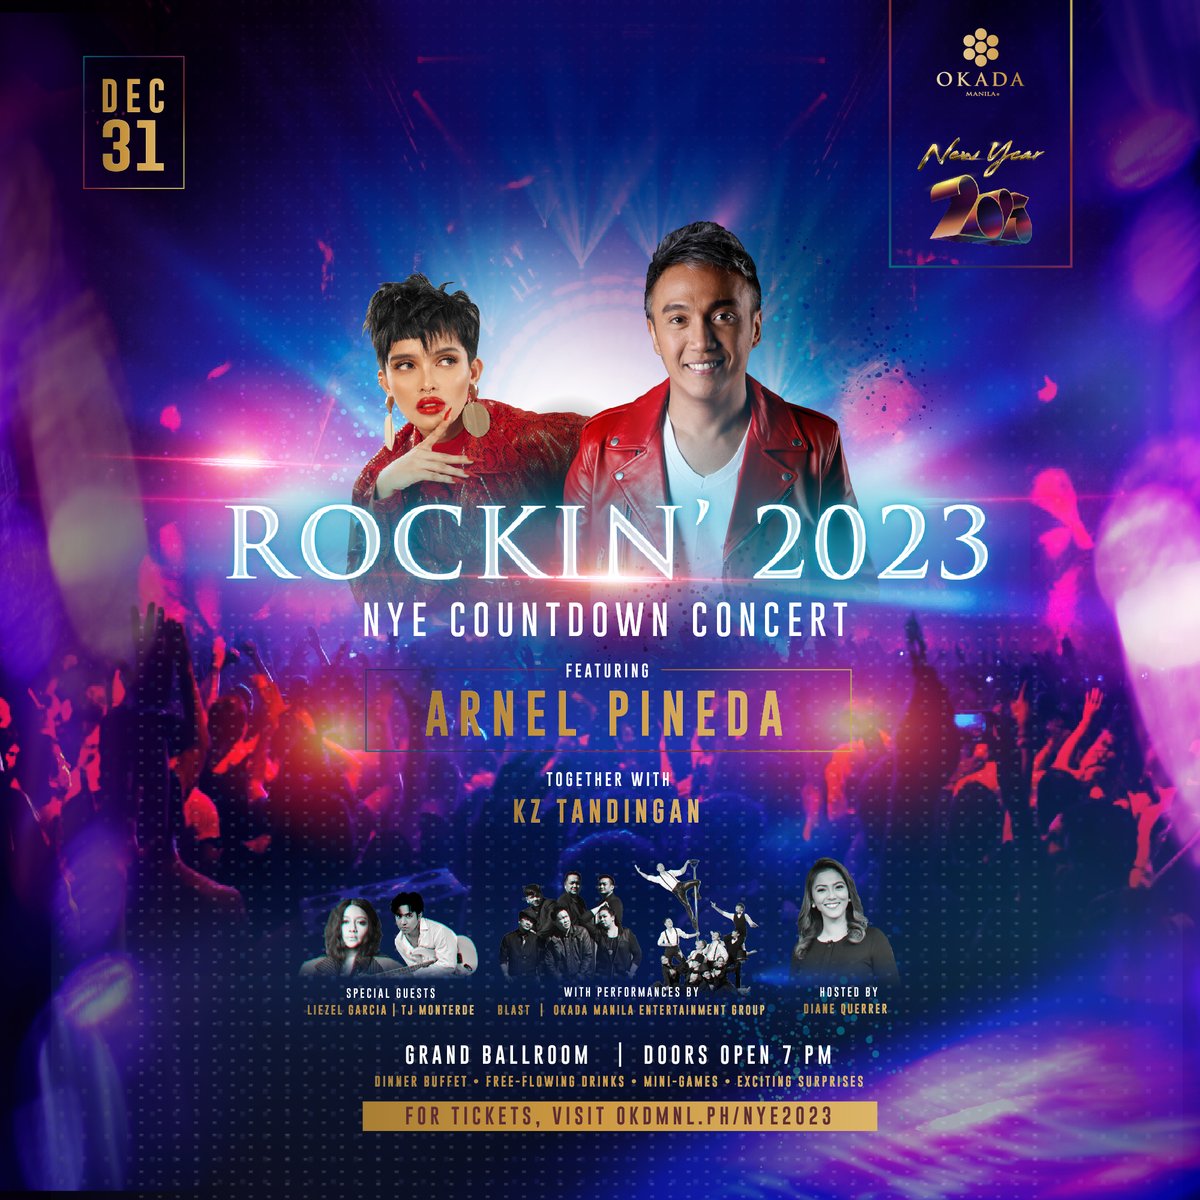 Have a rockin’ New Year’s Eve celebration with Pinoy rock icon @arnelpineda, celebrity couple @KZofficial and @tjmusicmonterde, and singer @imLiezelGarcia! Tickets are available at okdmnl.ph/NYE2023. #OkadaManilaNYE2023 #HolidaysAtOkadaManila